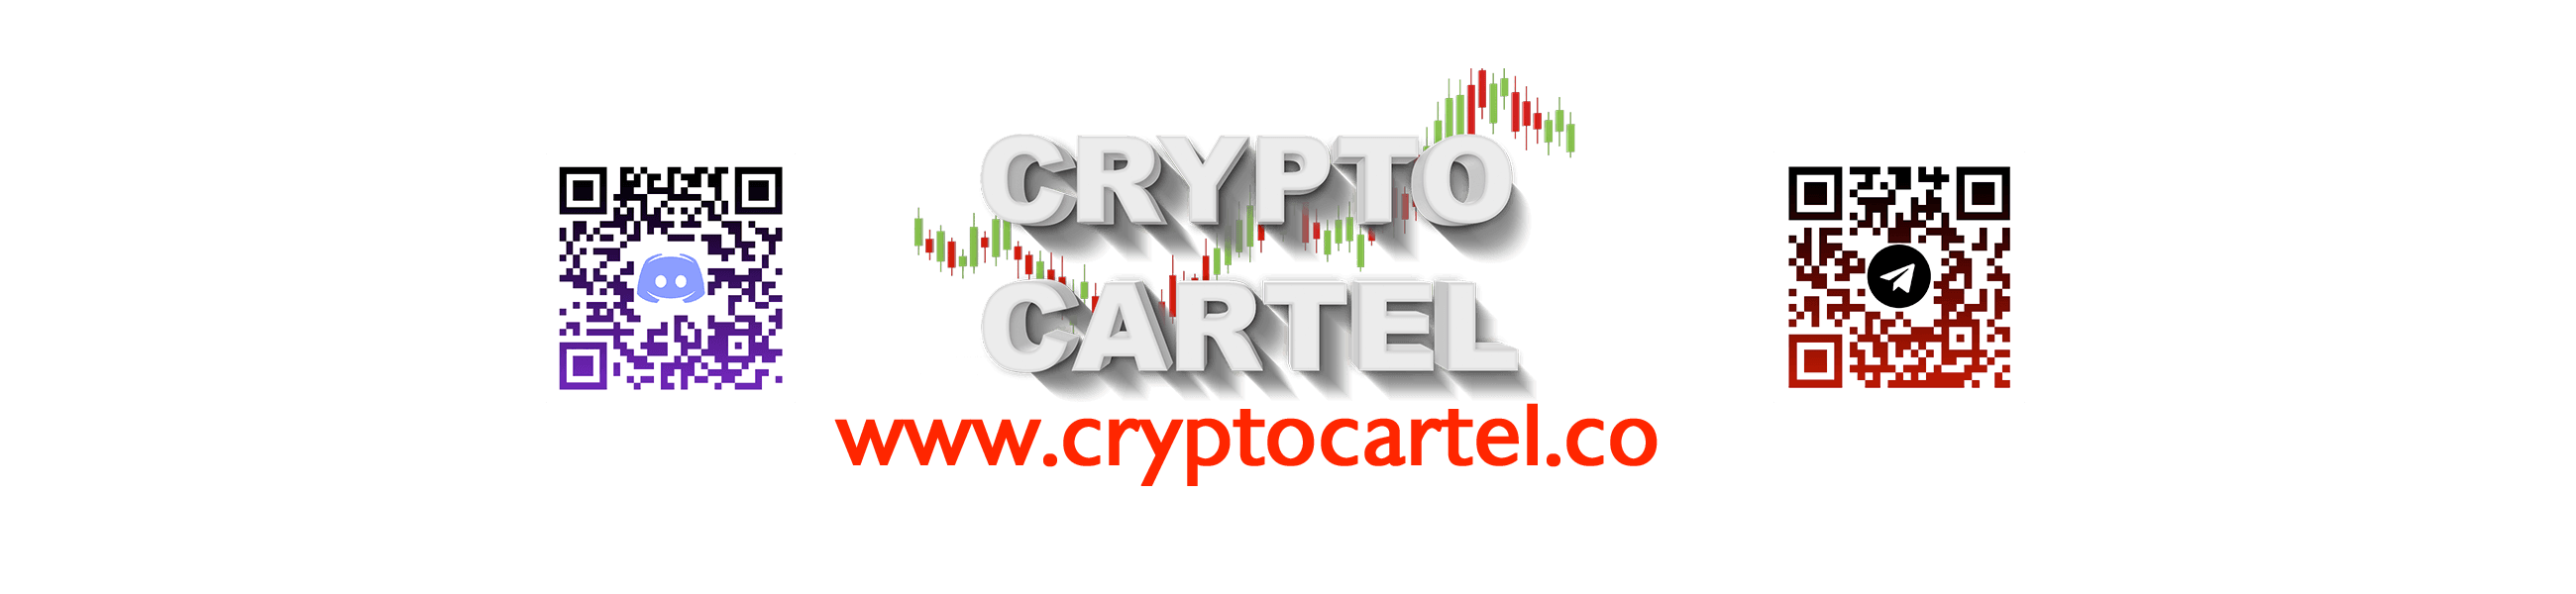 CryptoCartelOriginal banner